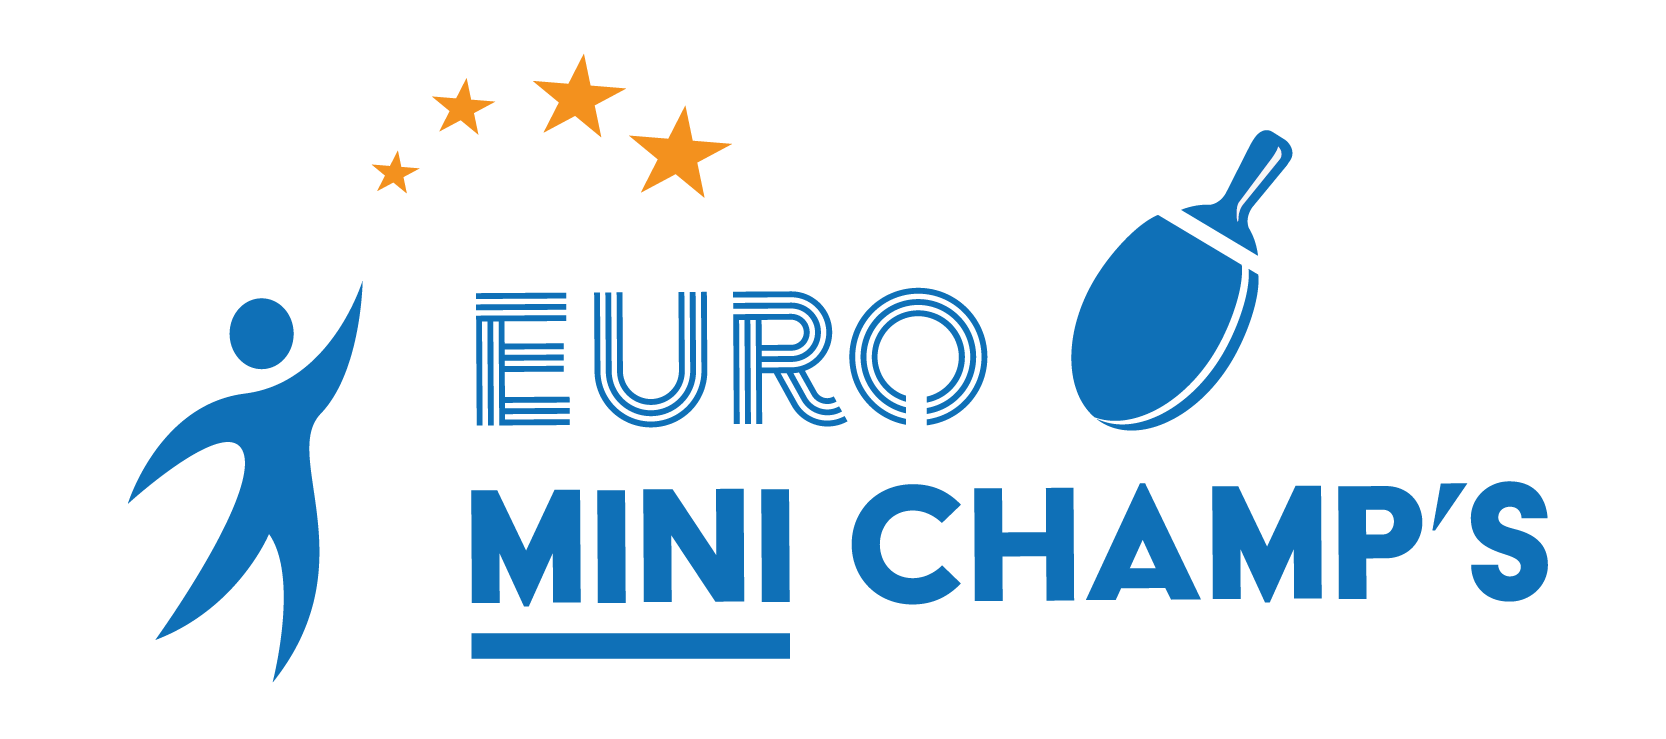 Euro Challenge